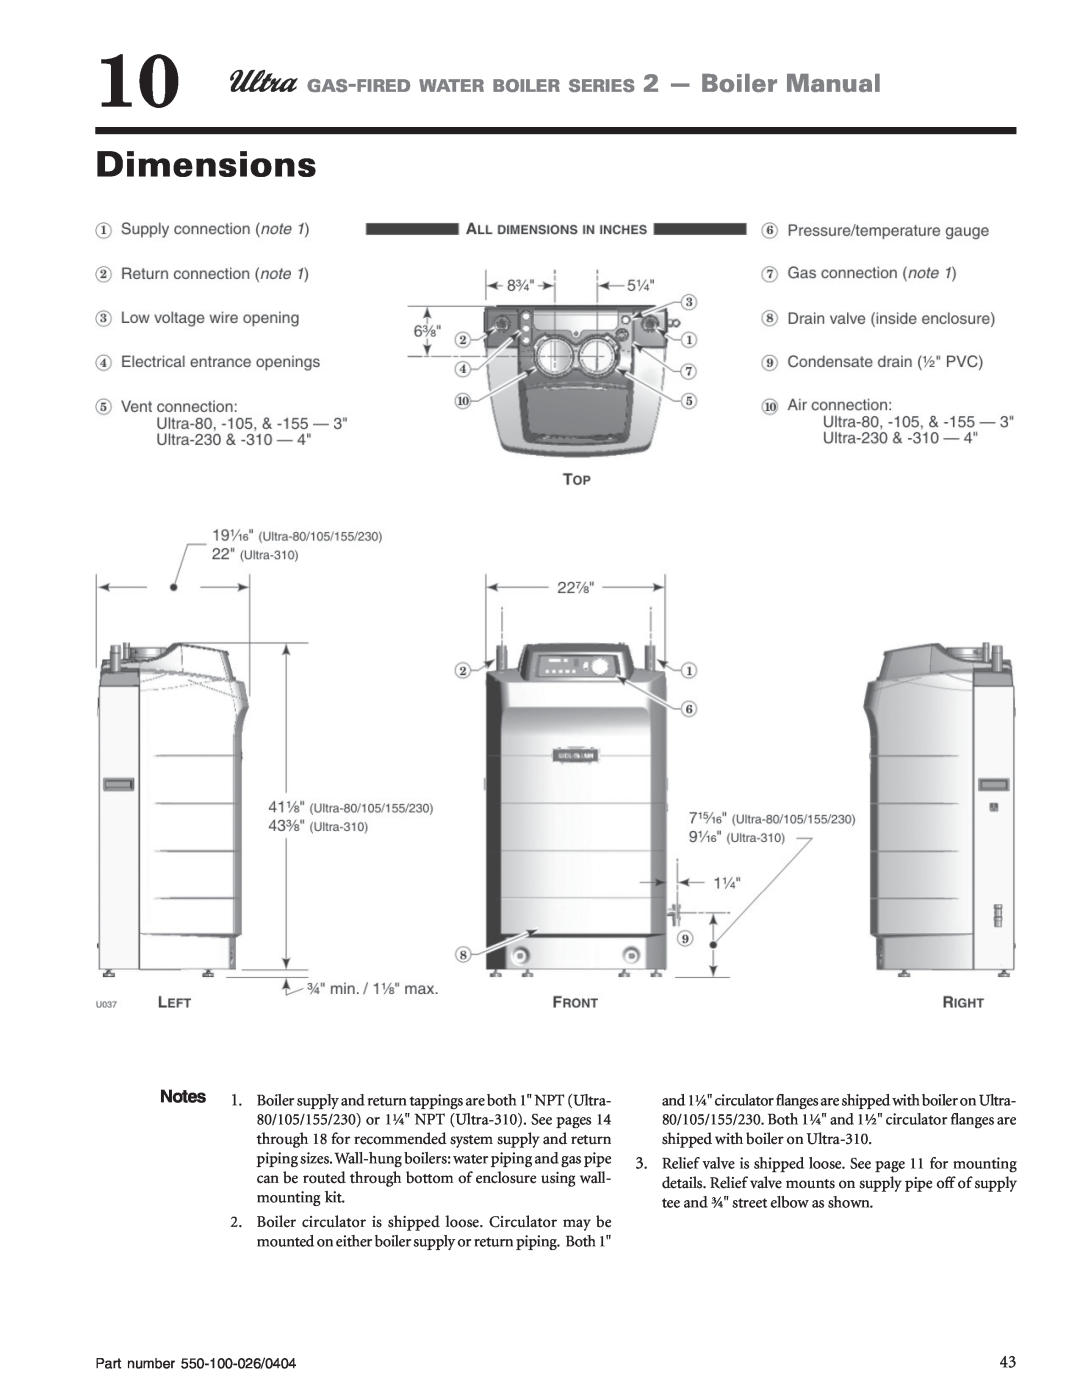 Ultra electronic 155, 105, 80, 230 & -310 manual Dimensions, GAS-FIREDWATER BOILER SERIES 2 - Boiler Manual 